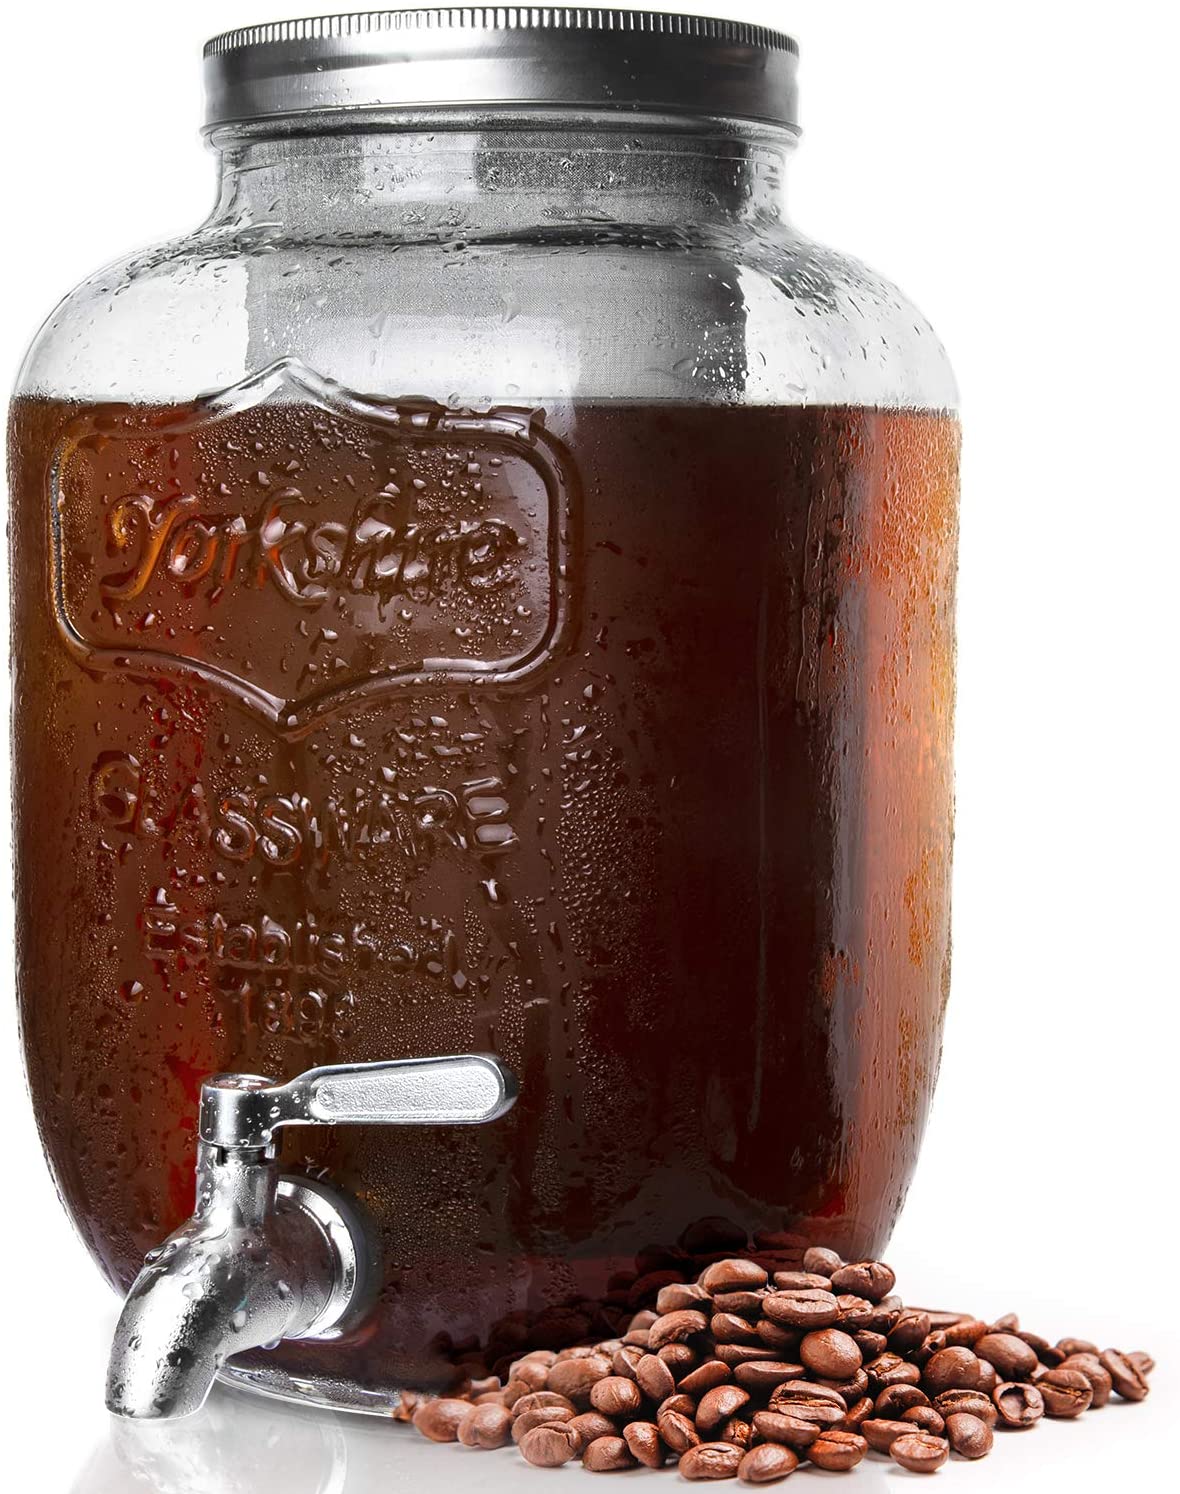 Kitchentoolz 1 Gallon Premium Cold Brew Coffee Maker - 4 Quart Strong Glass Dispenser with Metal Spigot Dispenser, Metal Filter and Airtight